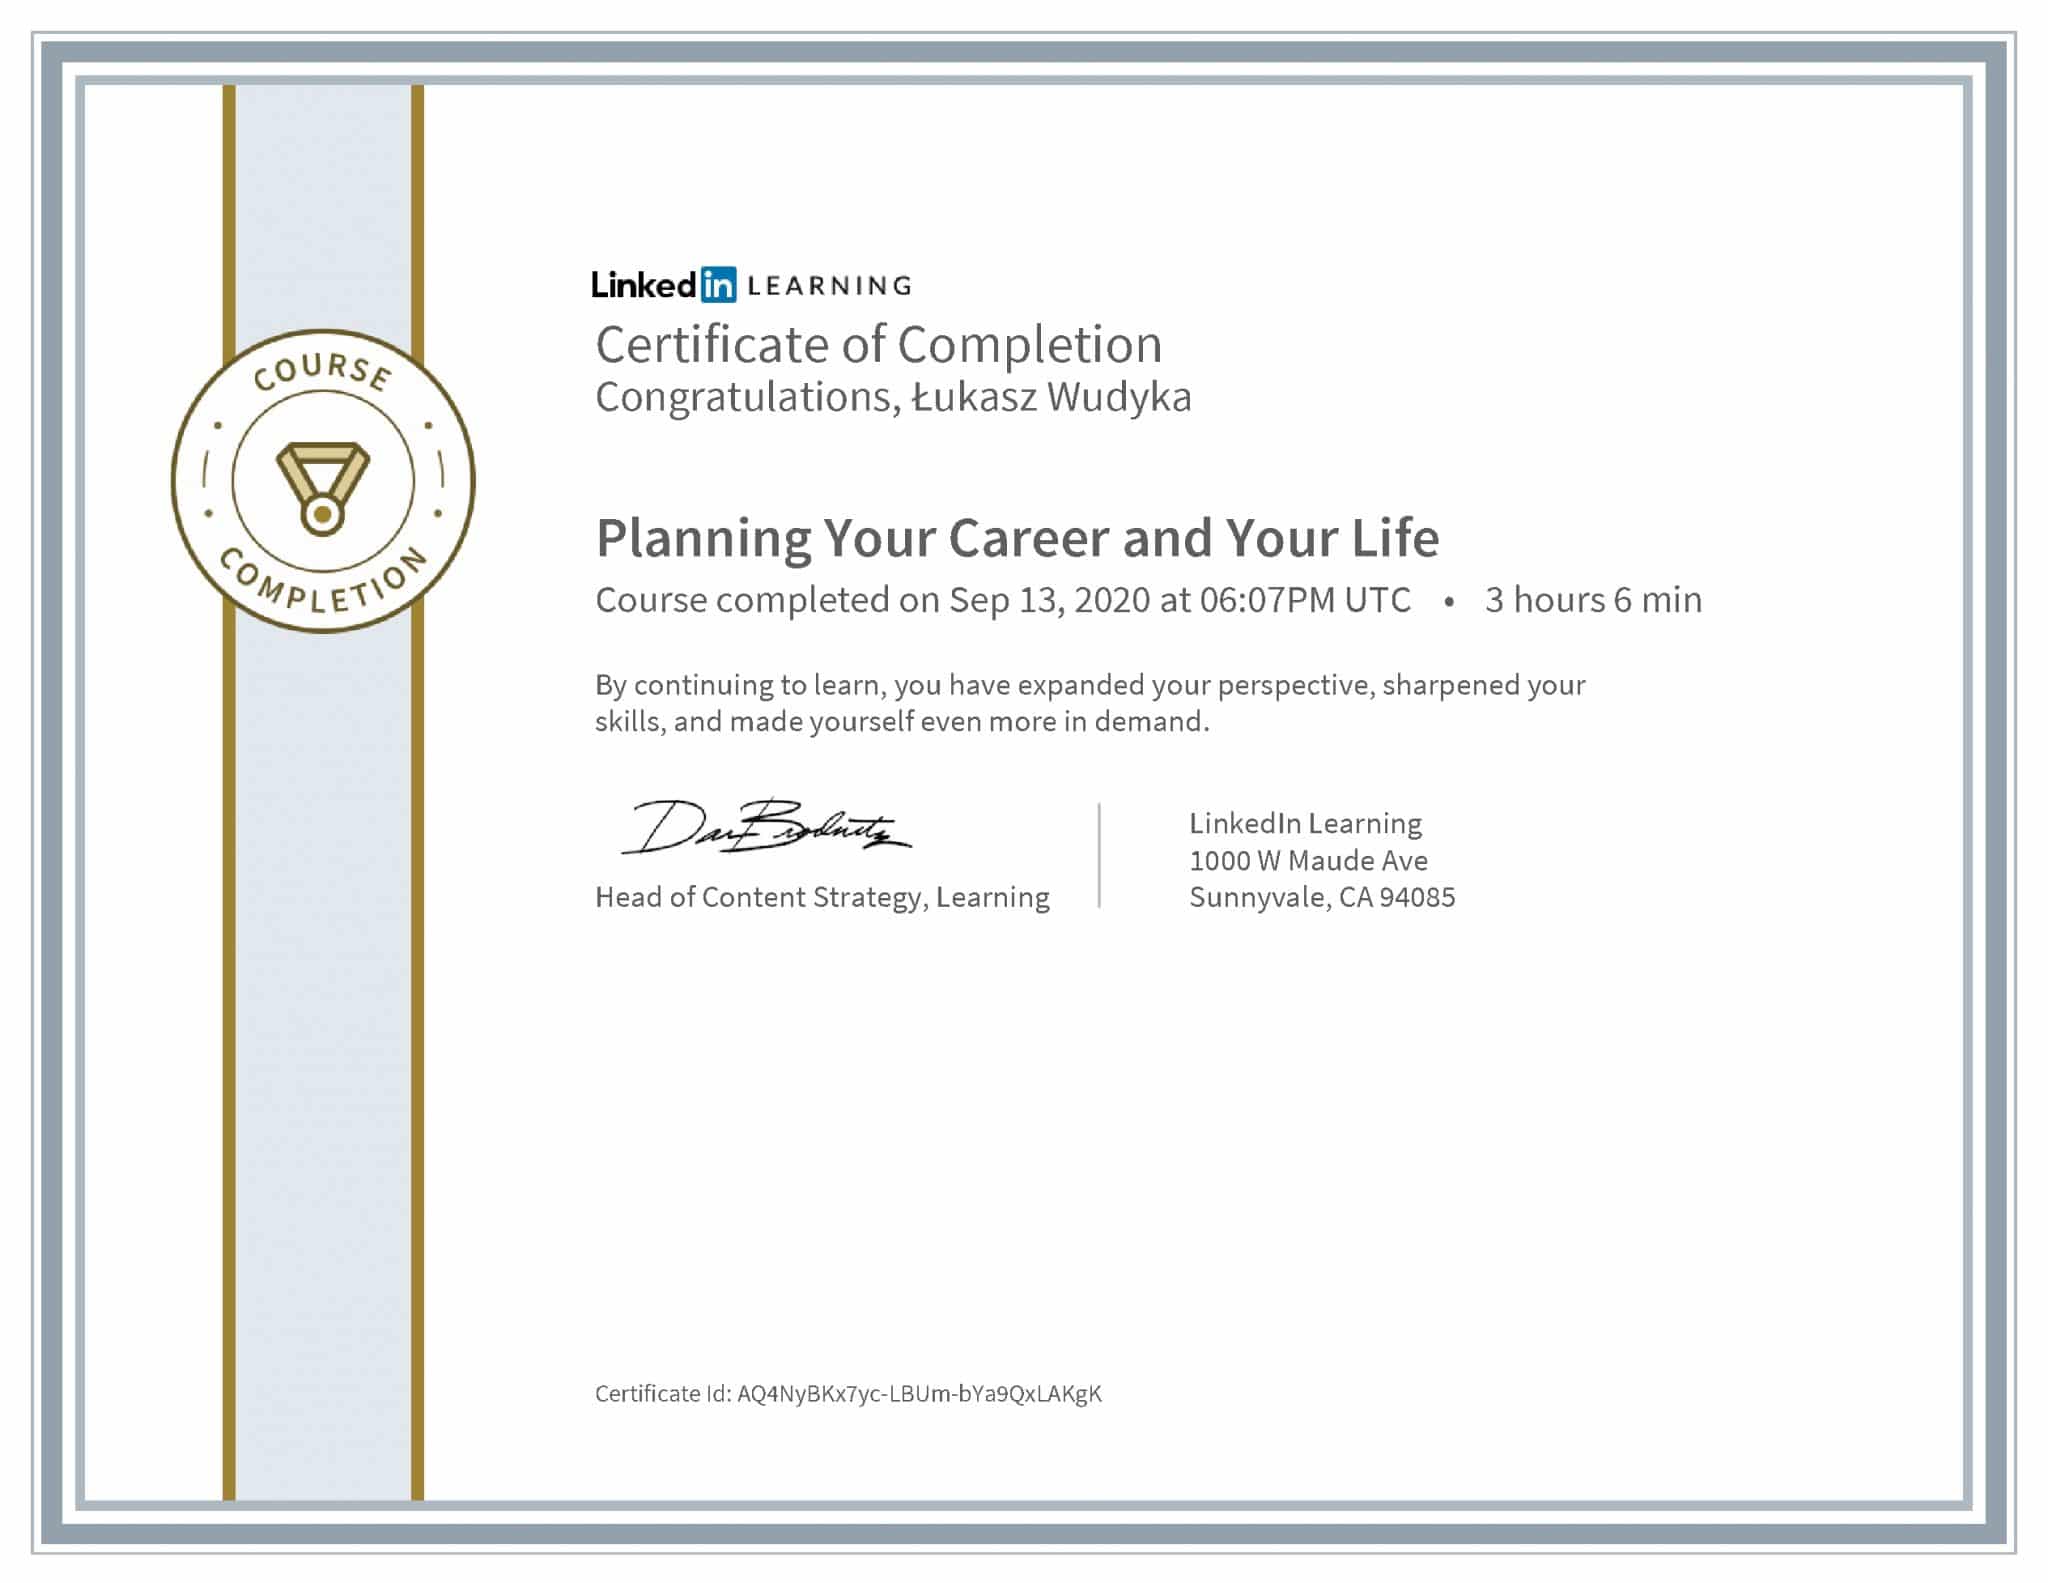 Łukasz Wudyka certyfikat LinkedIn Planning Your Career and Your Life